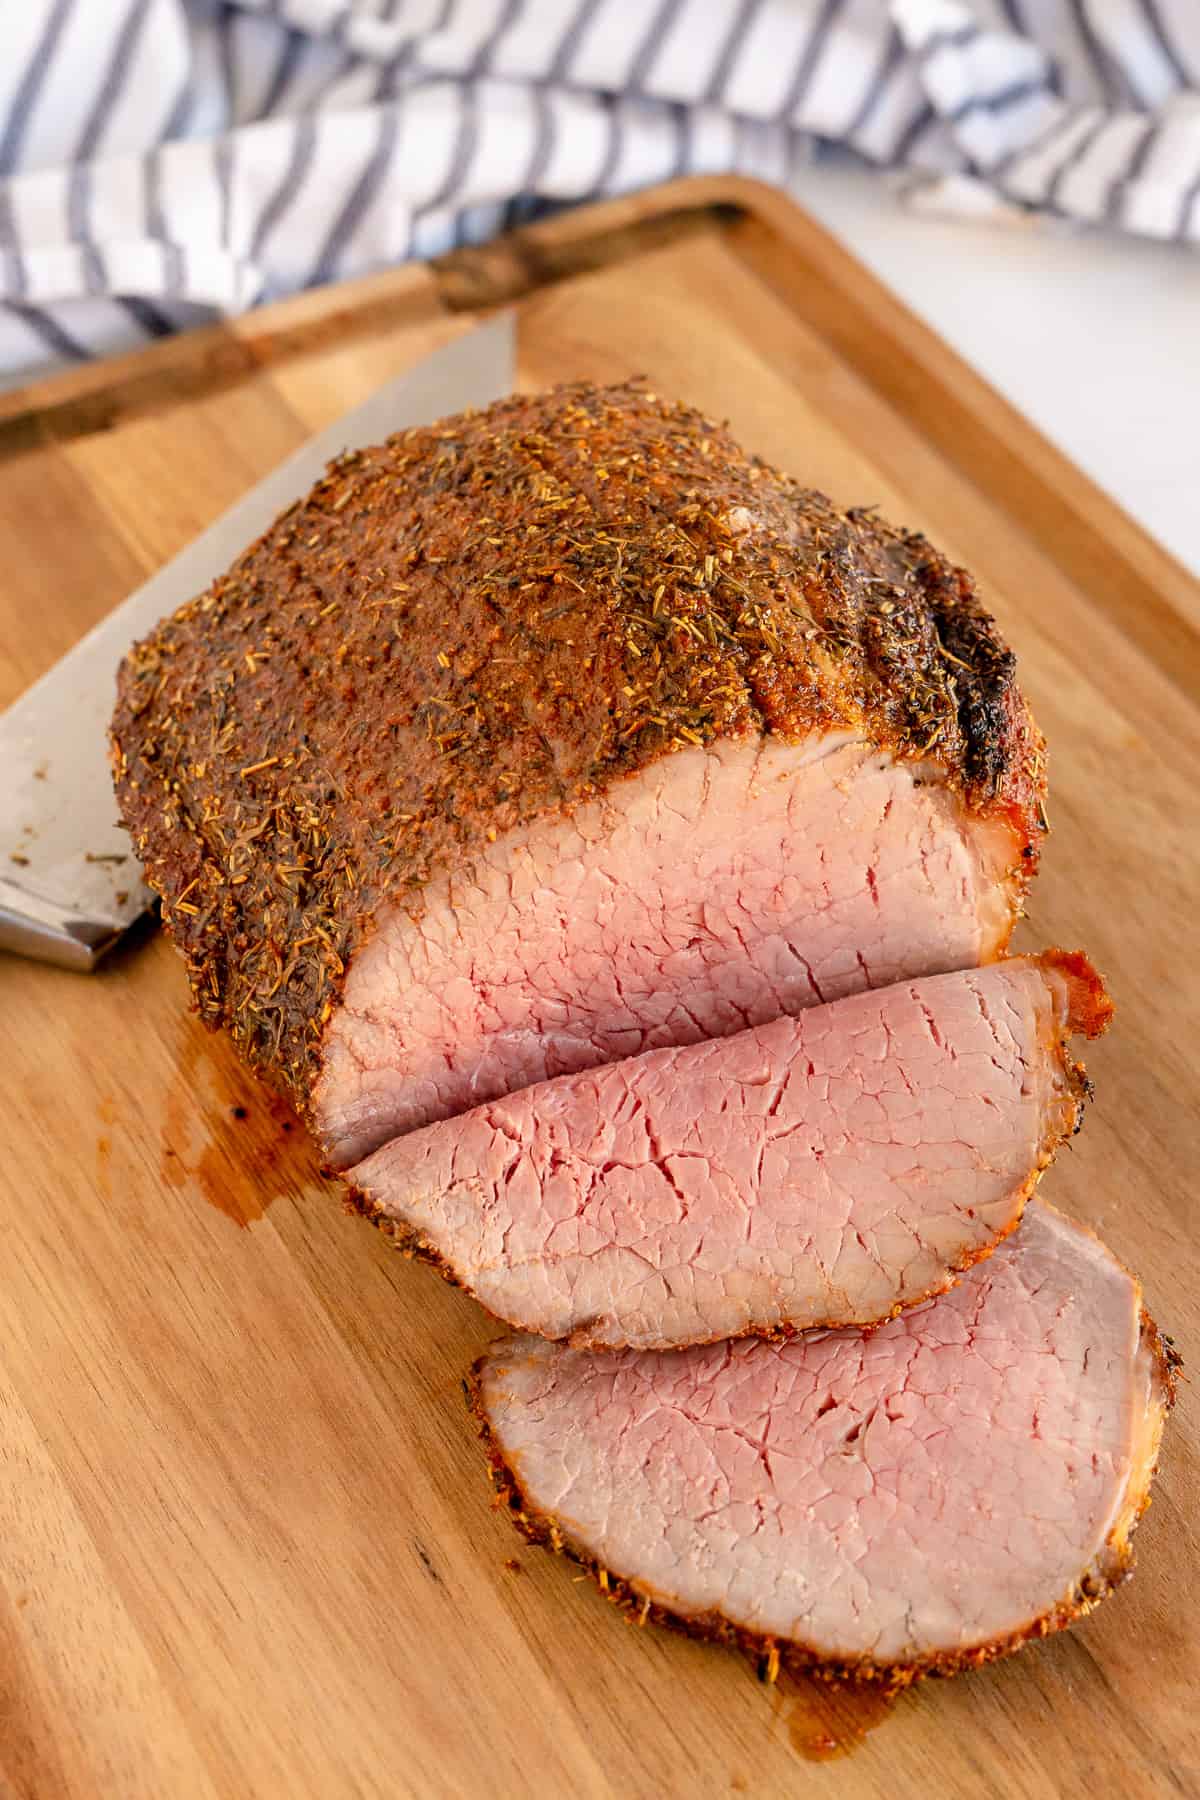 Sliced eye of round roast beef on a cutting board.